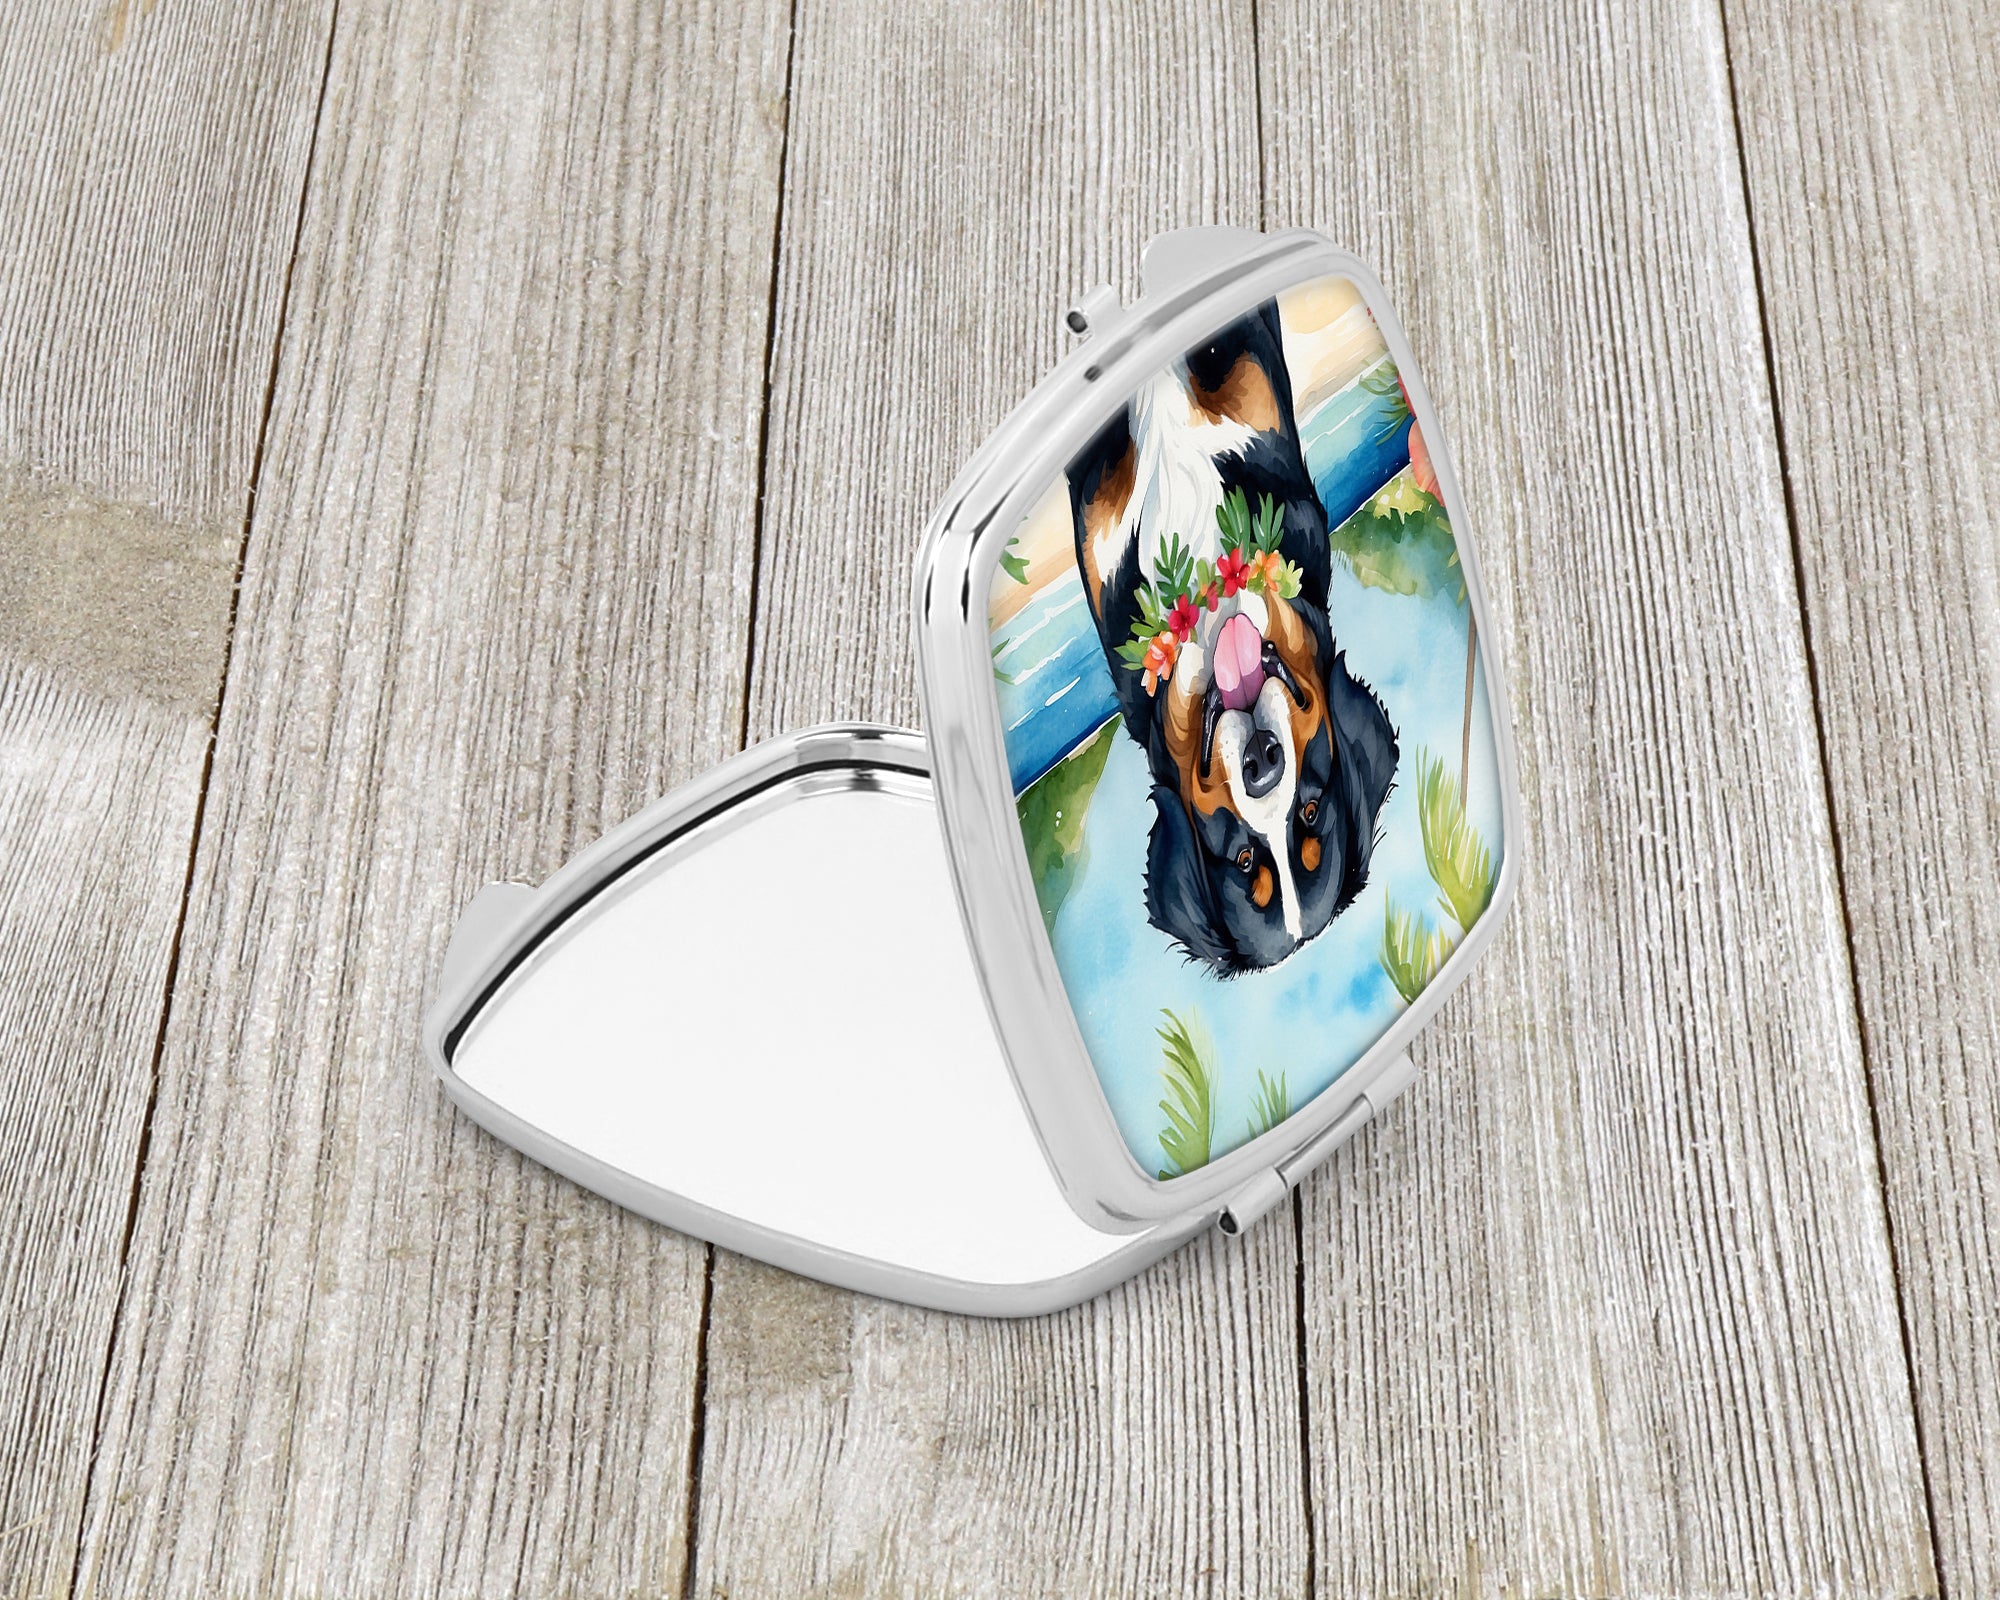 Buy this Bernese Mountain Dog Luau Compact Mirror